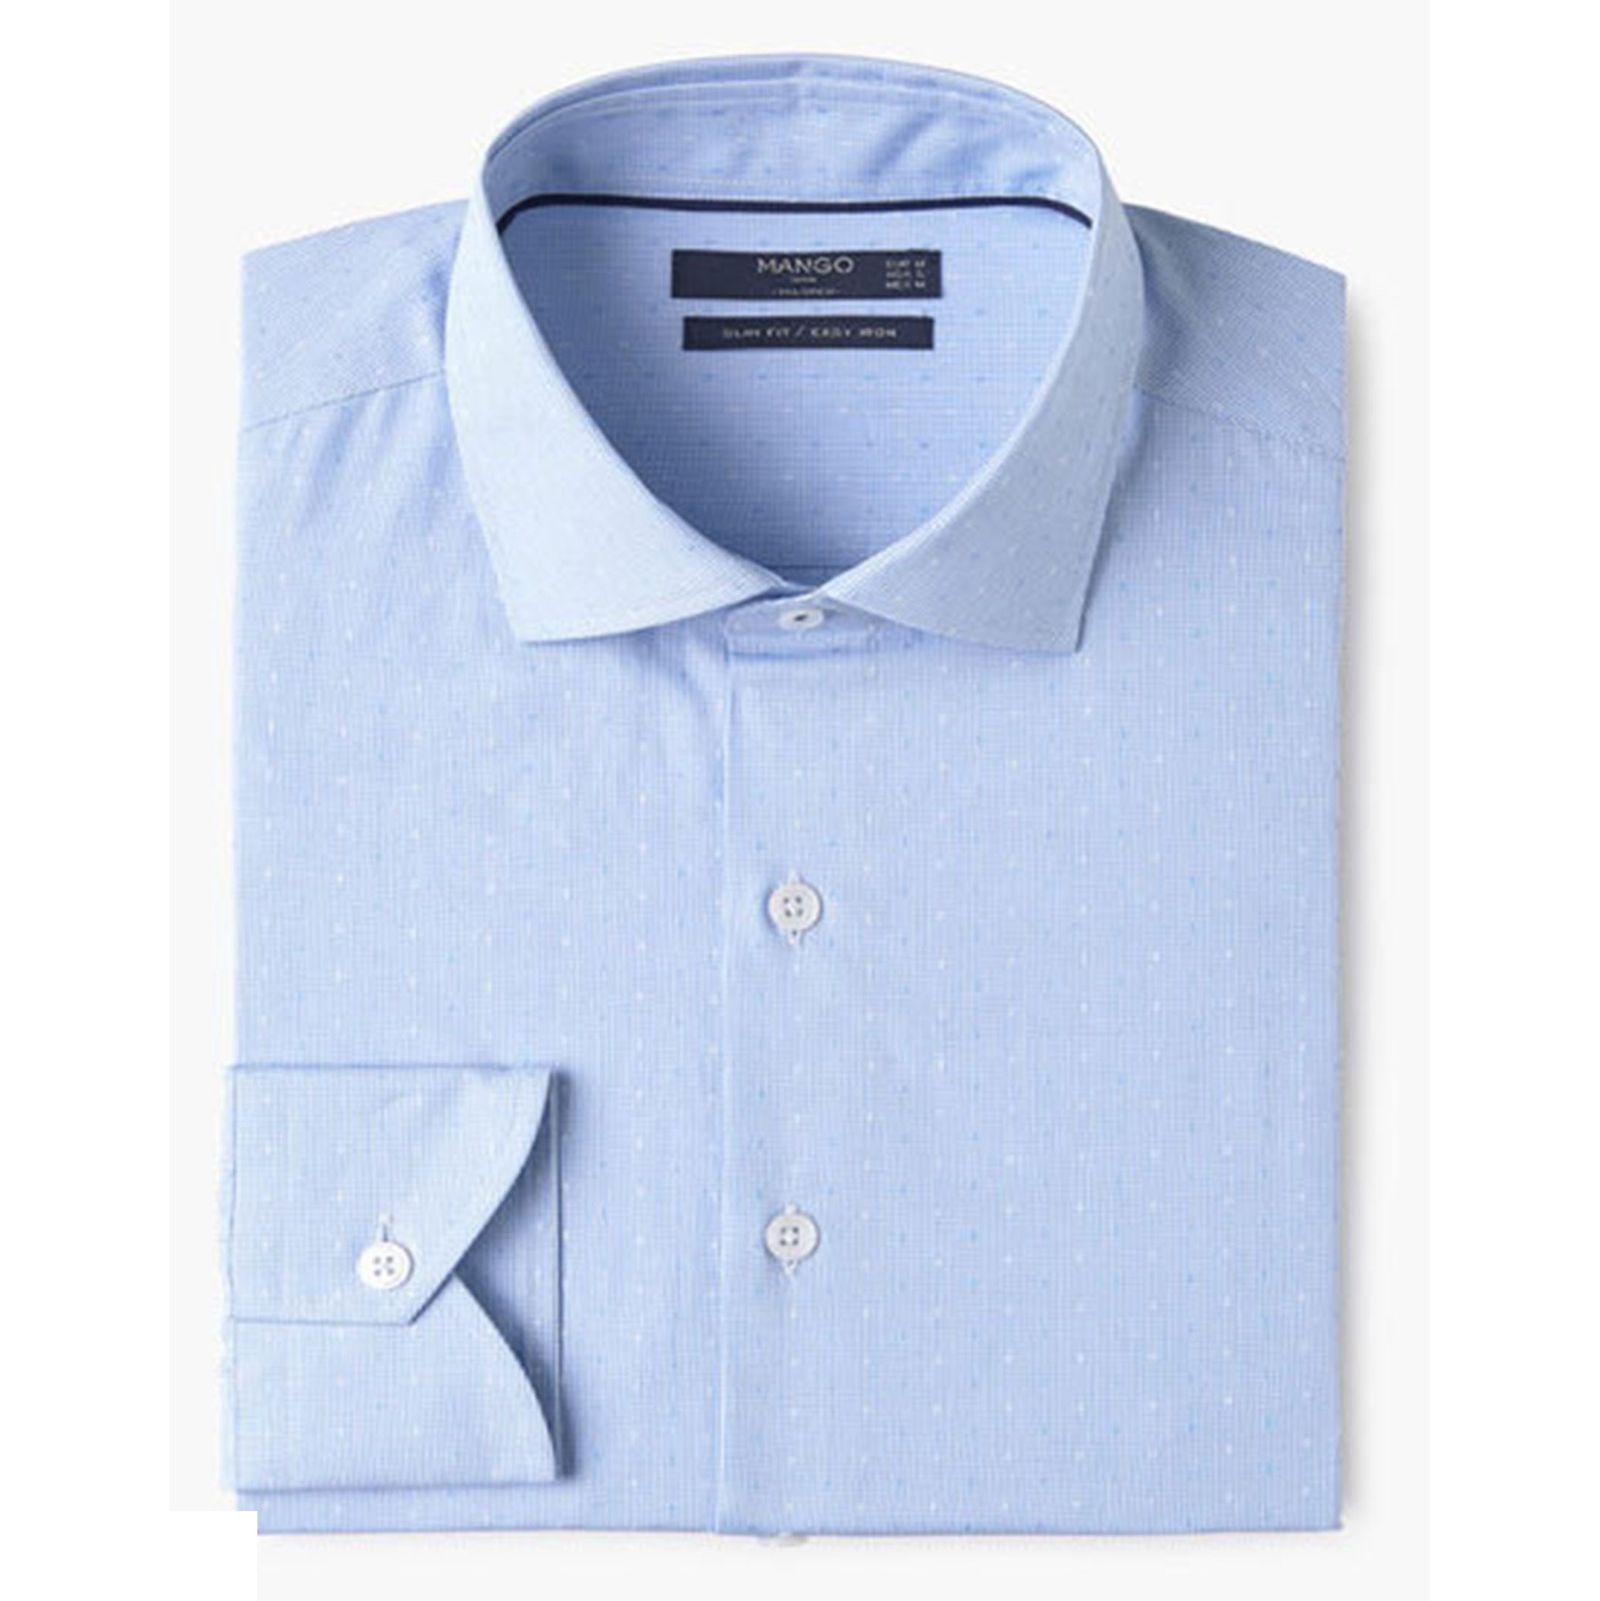 پیراهن رسمی مردانه - مانگو - آبي روشن - 9